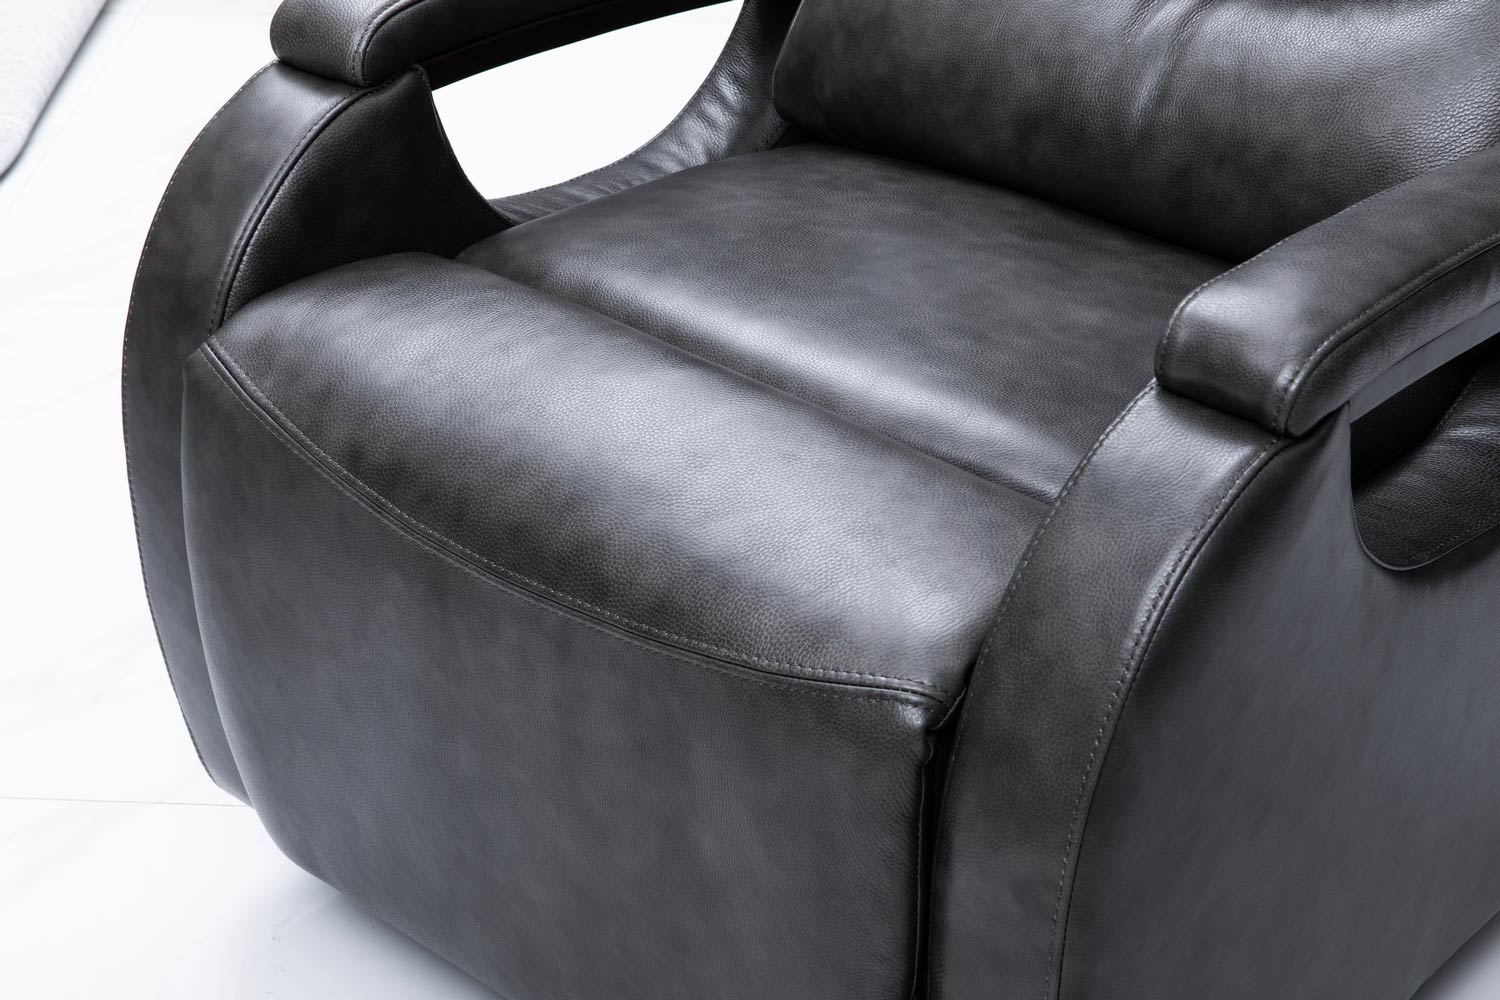 Barcalounger Jonas Swivel Glider Recliner Chair - Ryegate Gray/Leather match